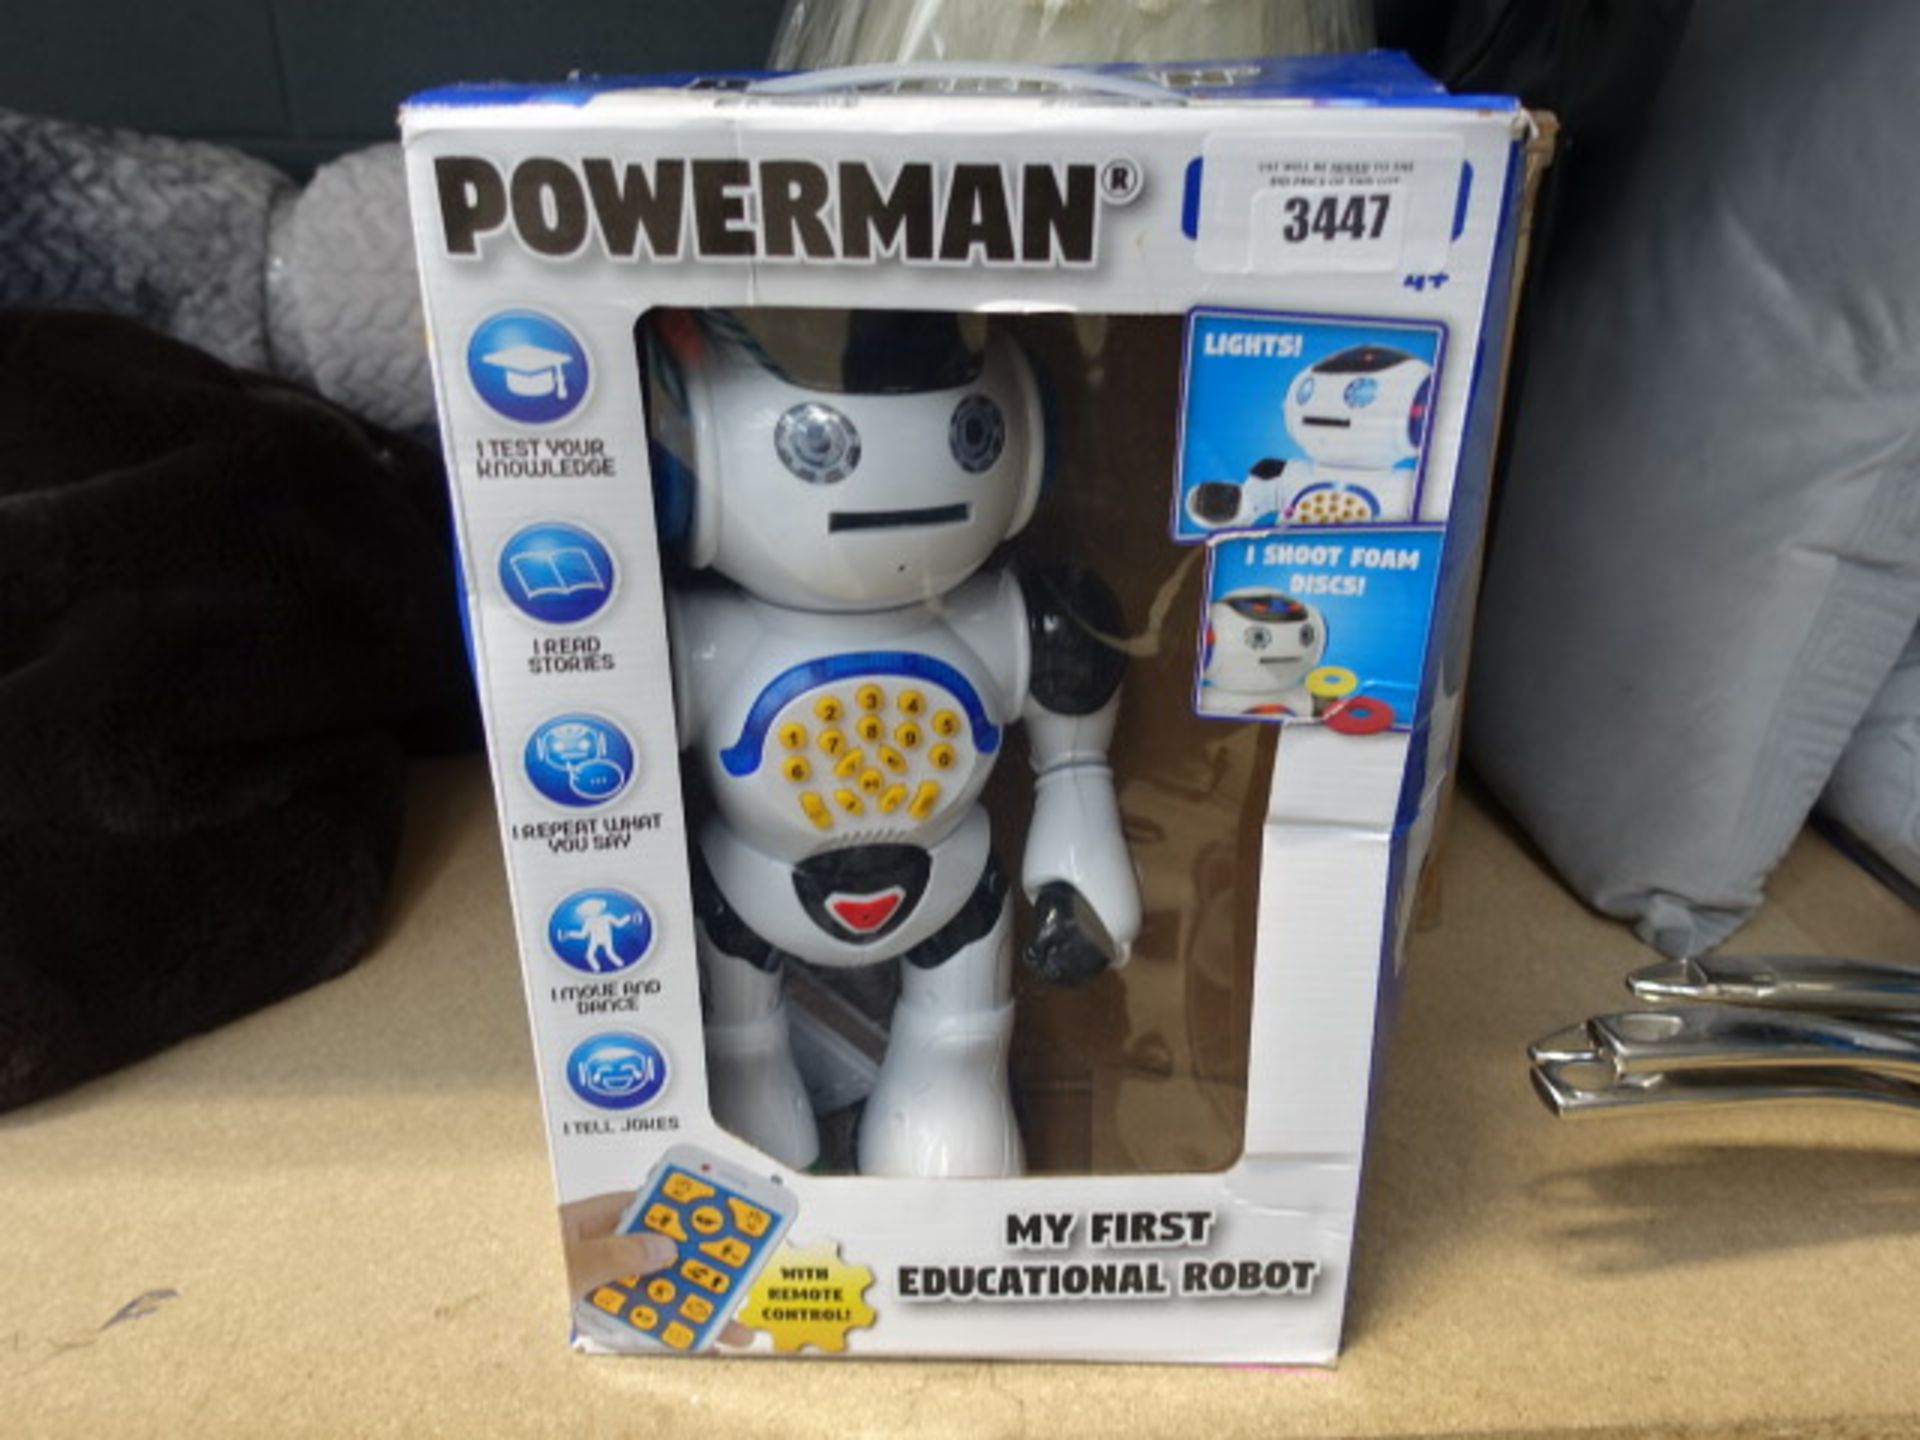 3172 Powerman educational robot